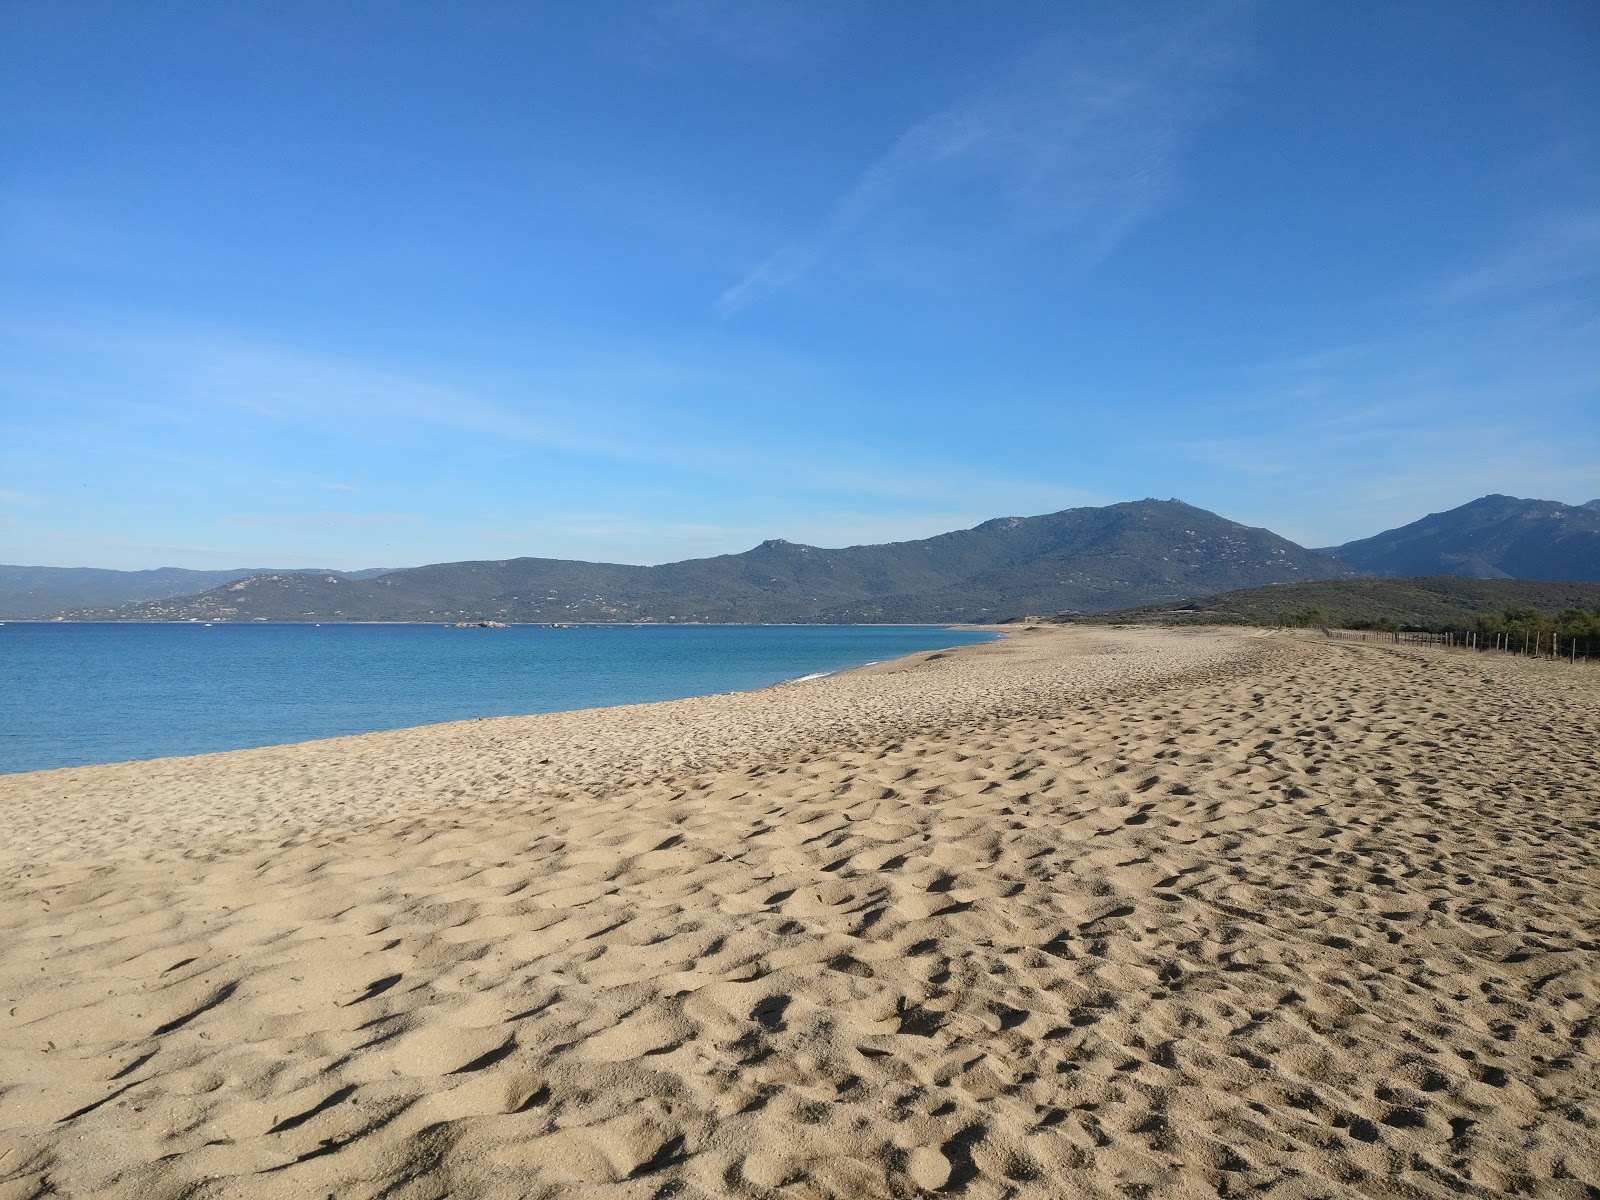 Zdjęcie Portigliolo beach obszar udogodnień